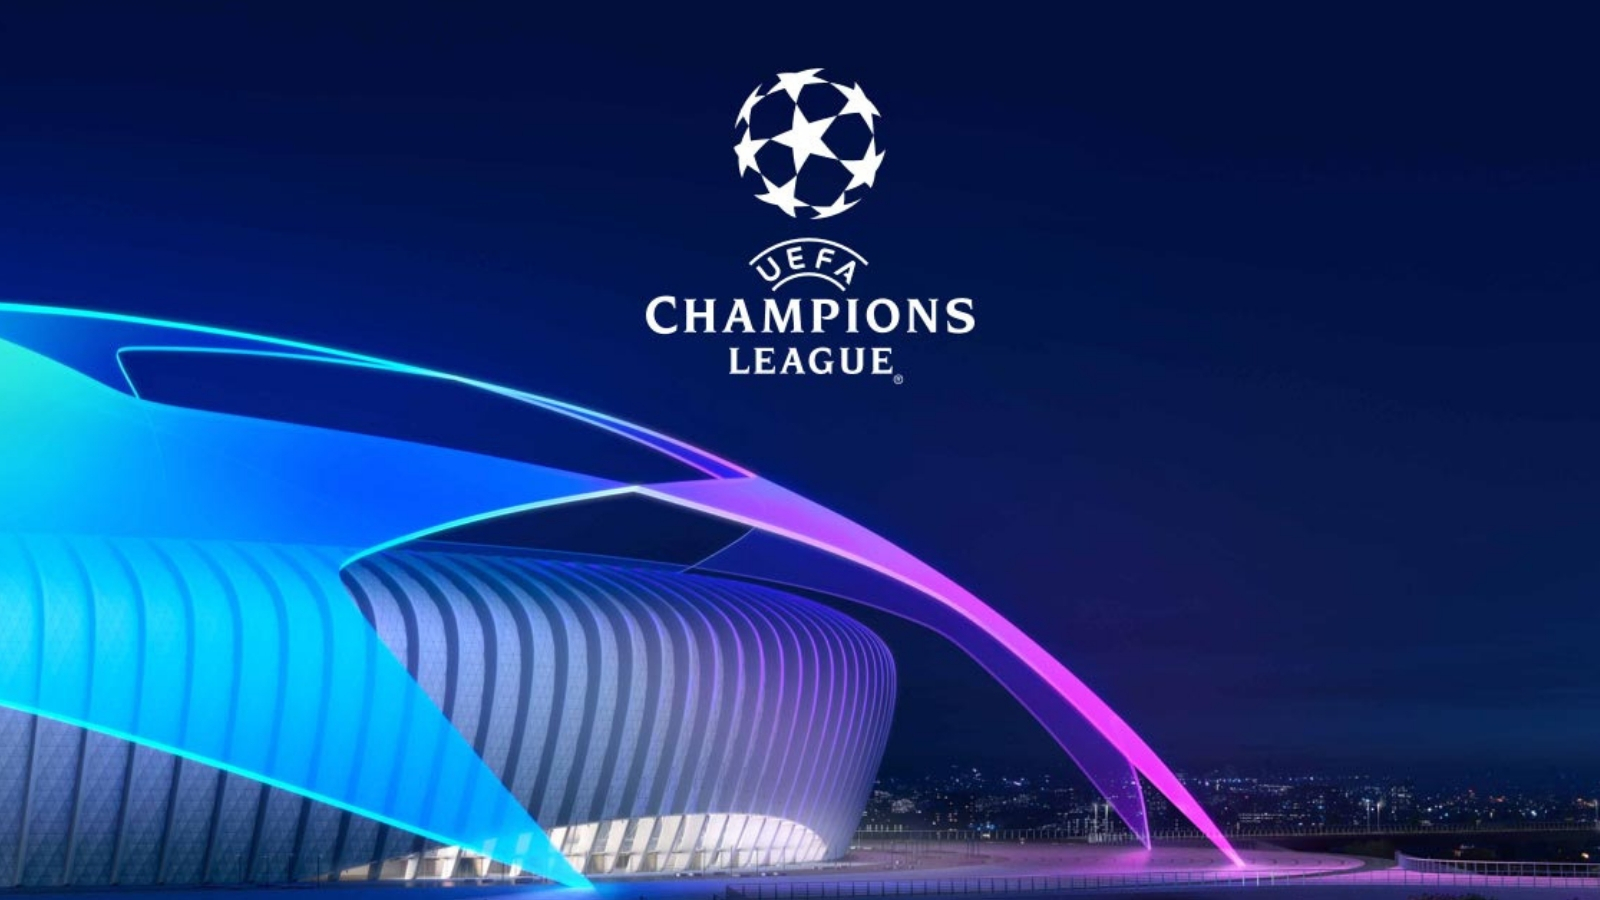 champions league wallpaper,light,purple,sky,lighting,architecture